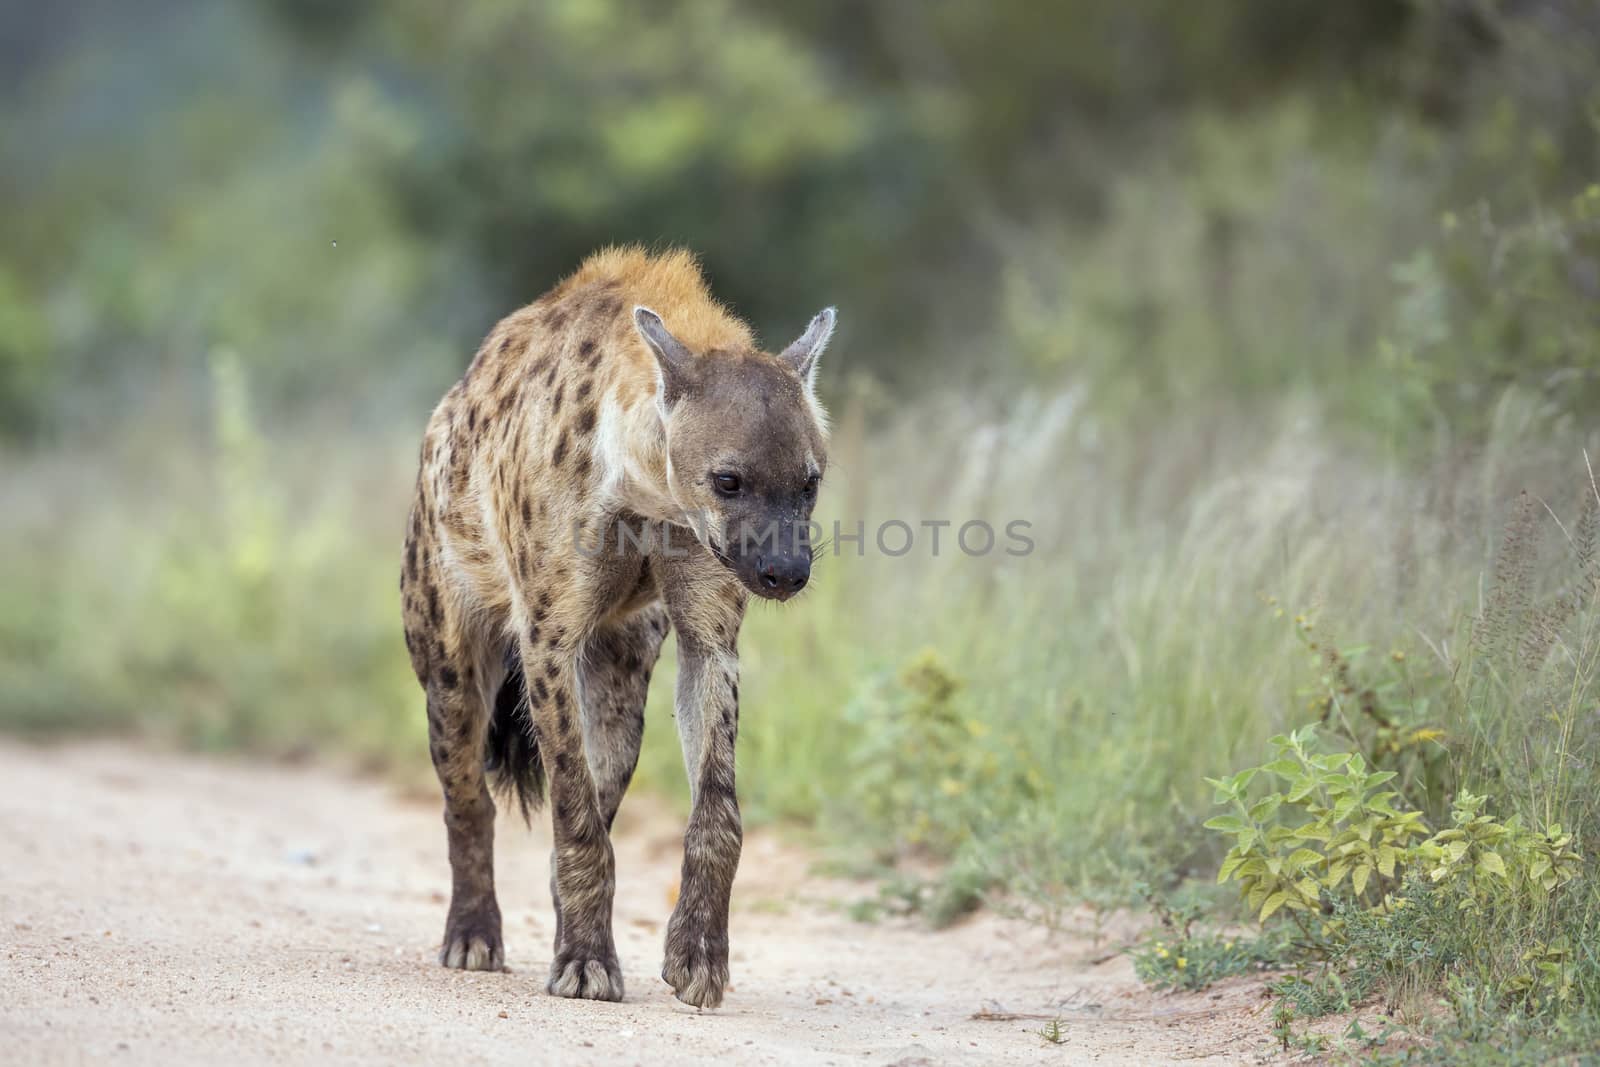 Spotted hyaena walking on safari dirt road in Kruger National park, South Africa ; Specie Crocuta crocuta family of Hyaenidae